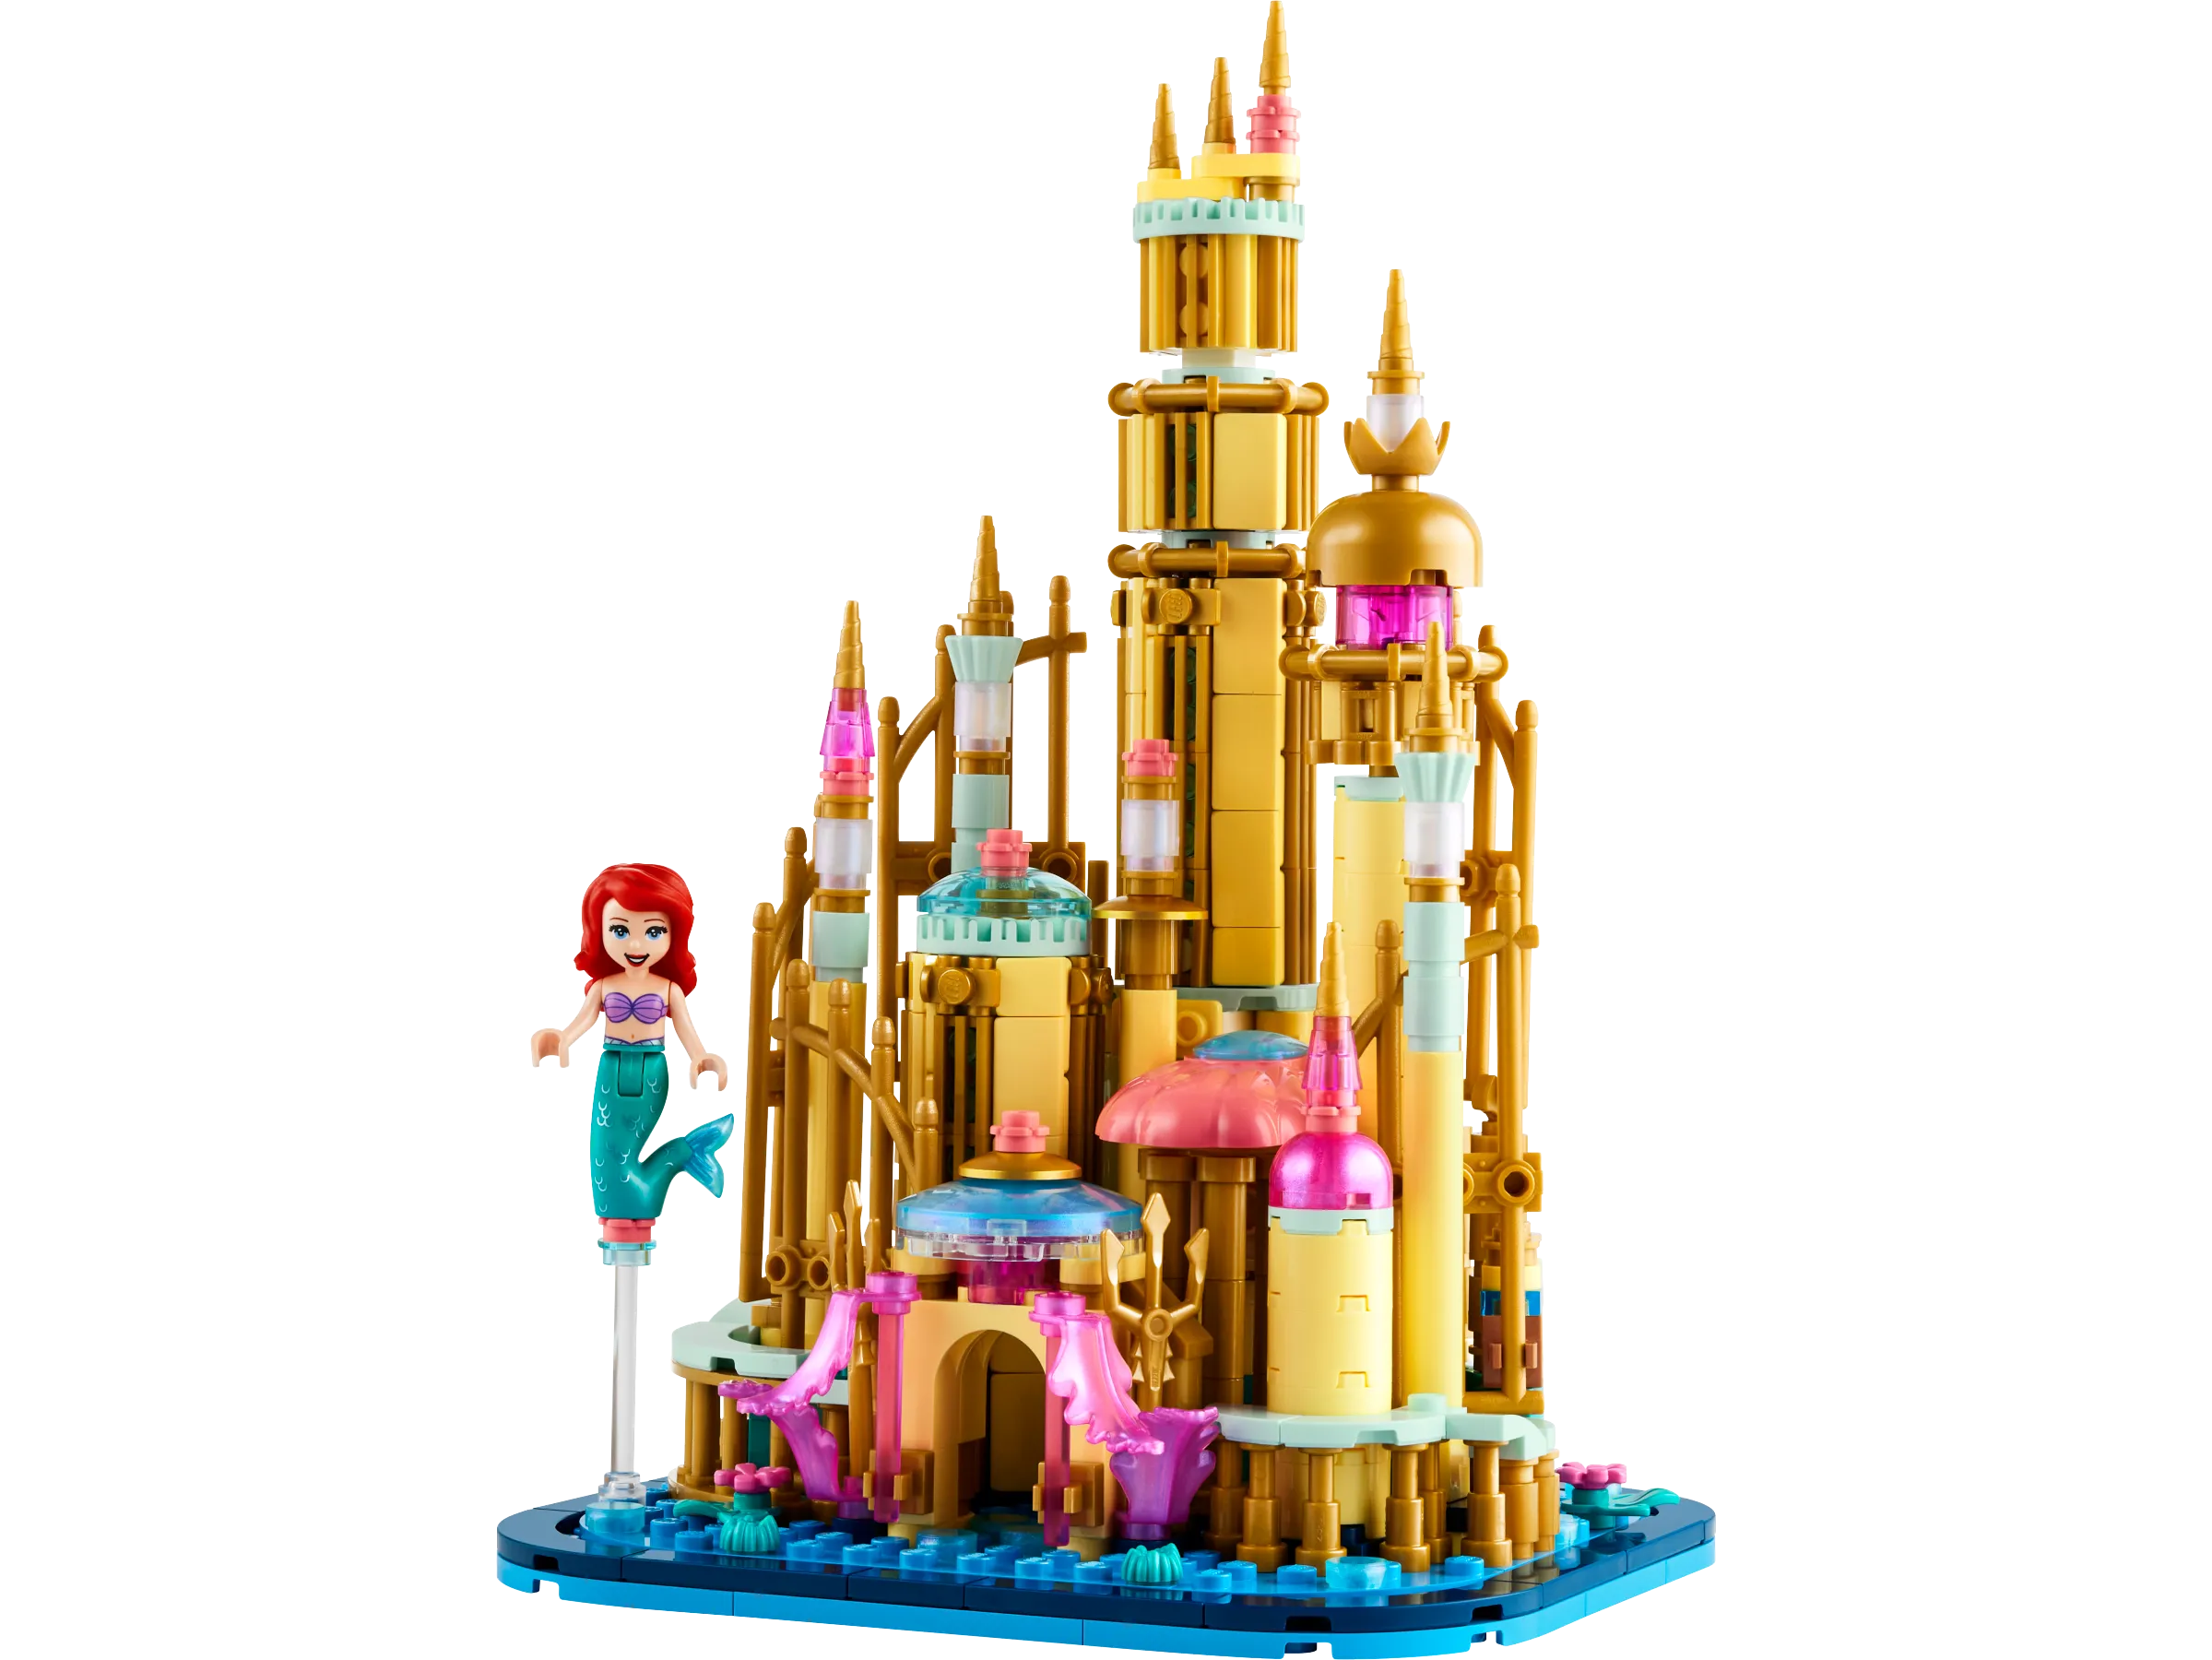 LEGO Disney 43249 Stitch Buildable Kids Toy Playset